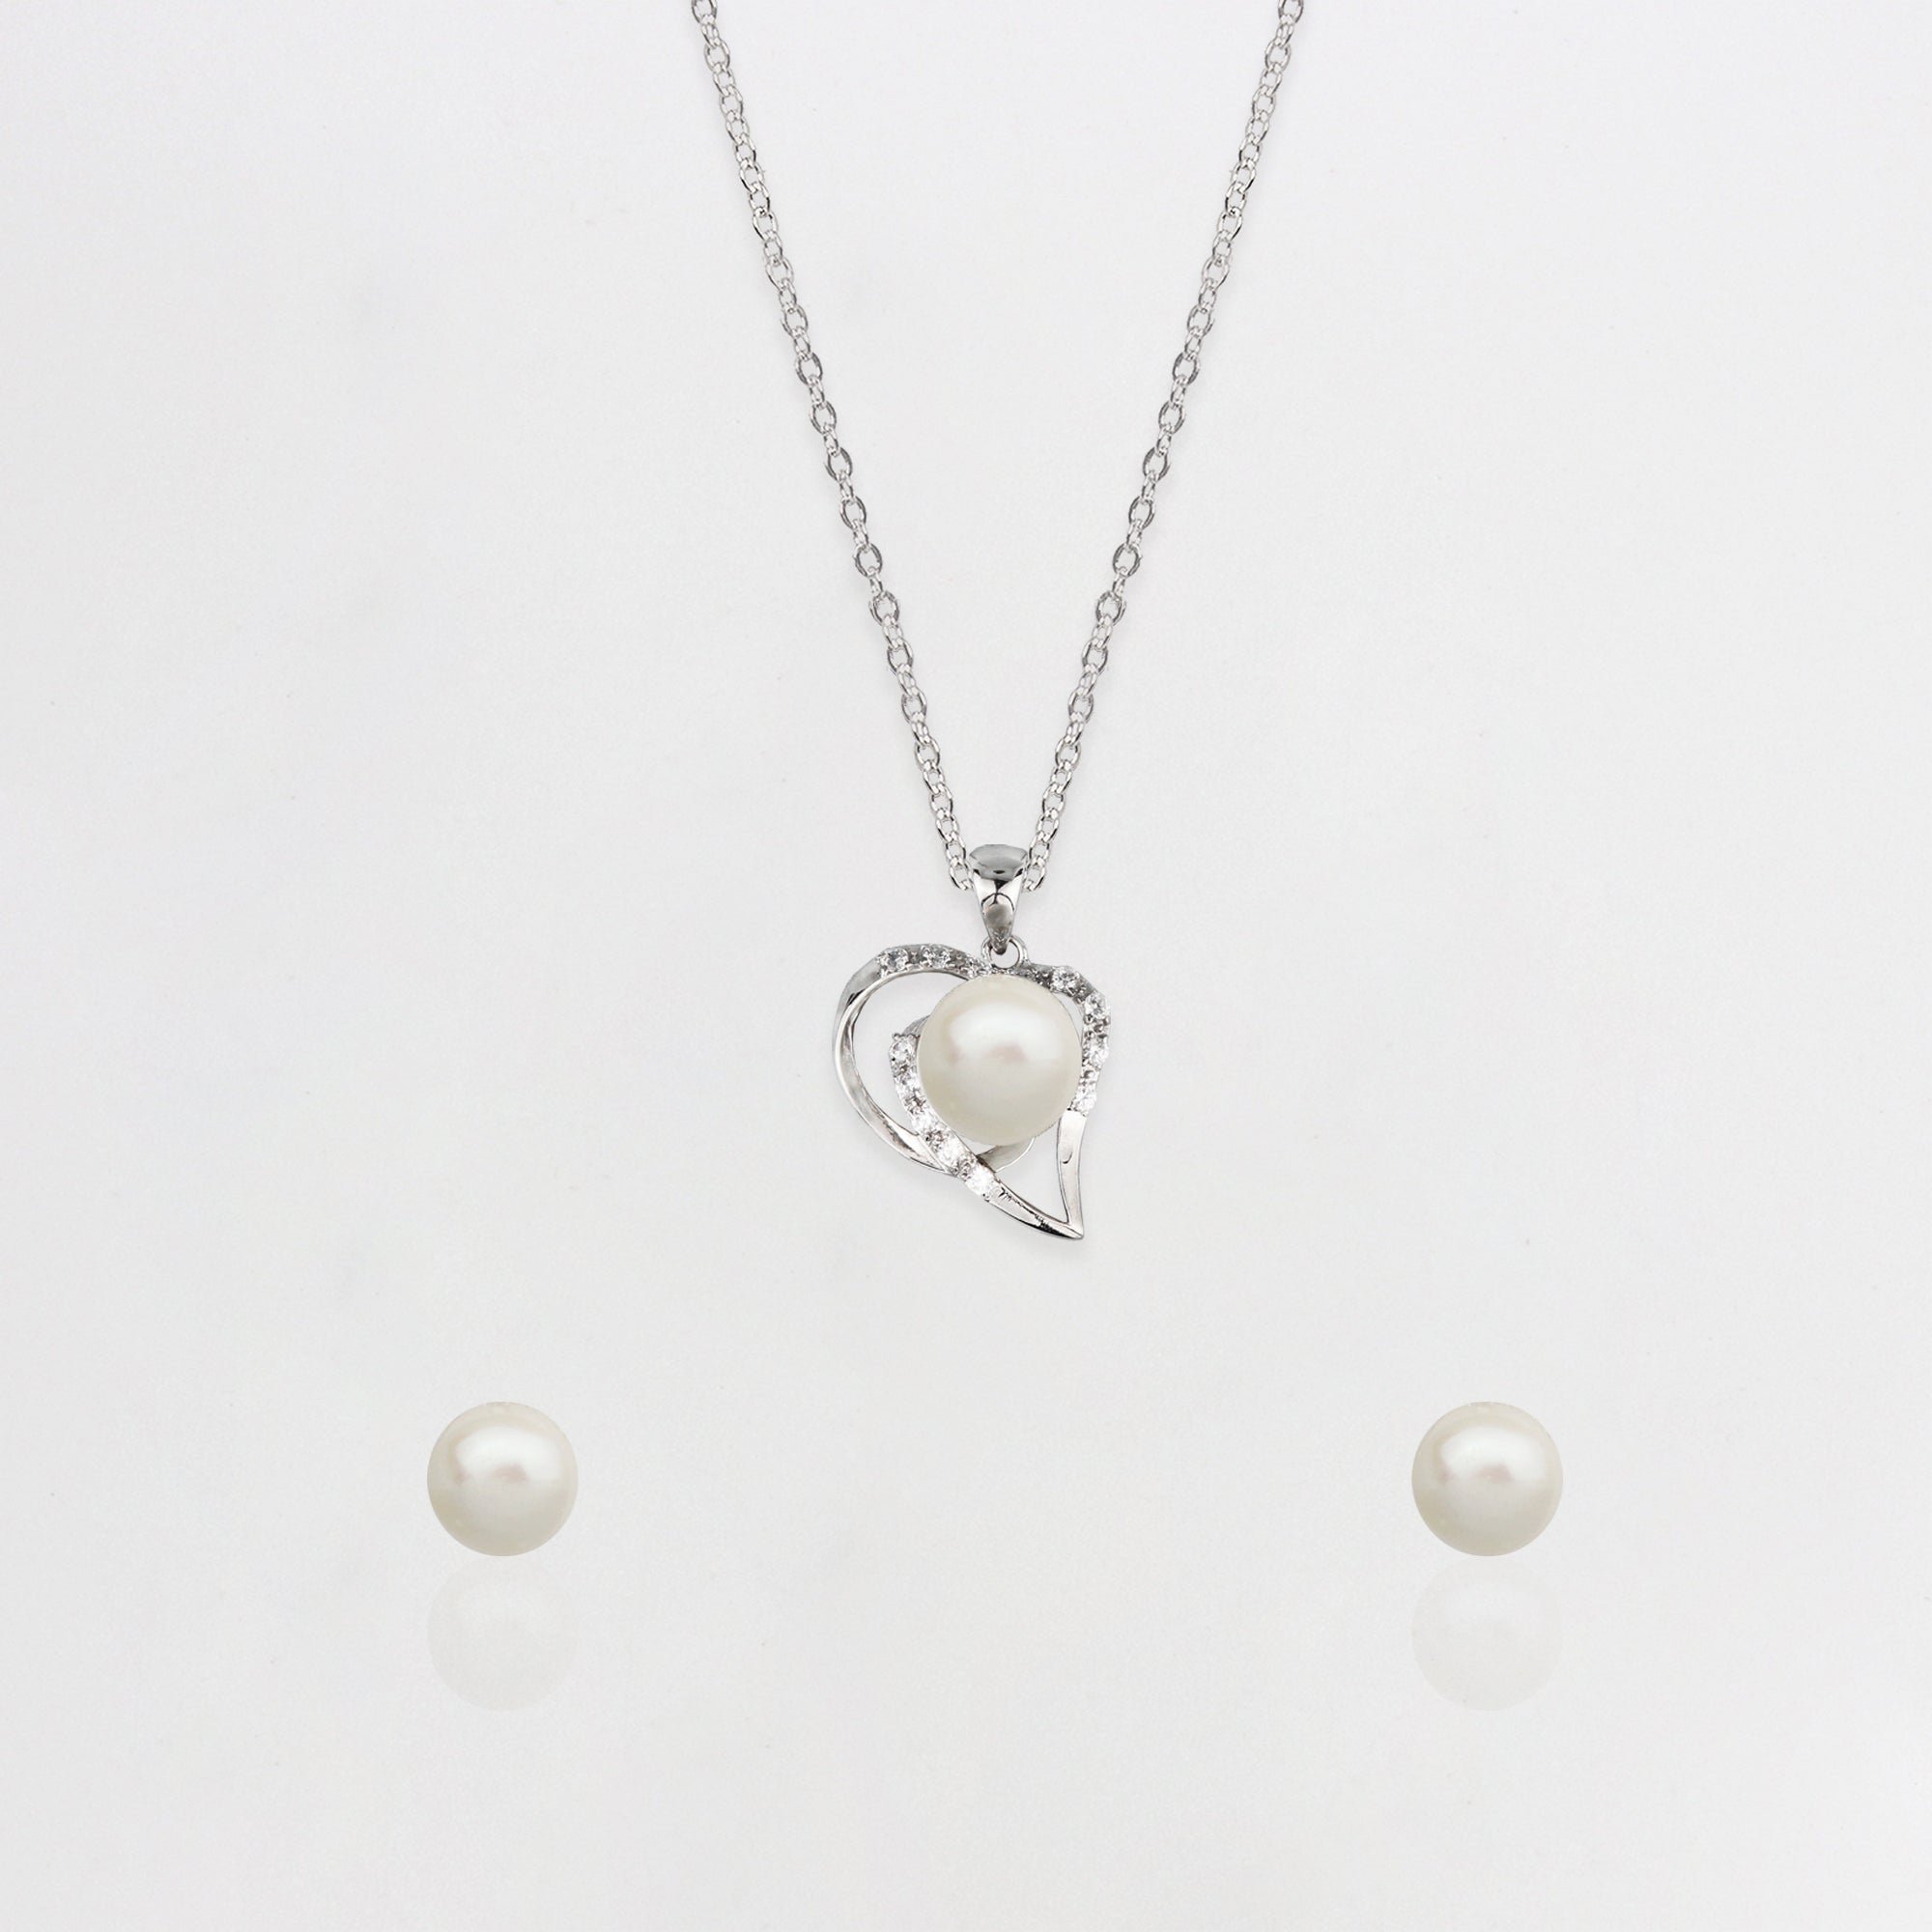 Jovono Multilayered Necklaces Heart Pearl Pendant India | Ubuy